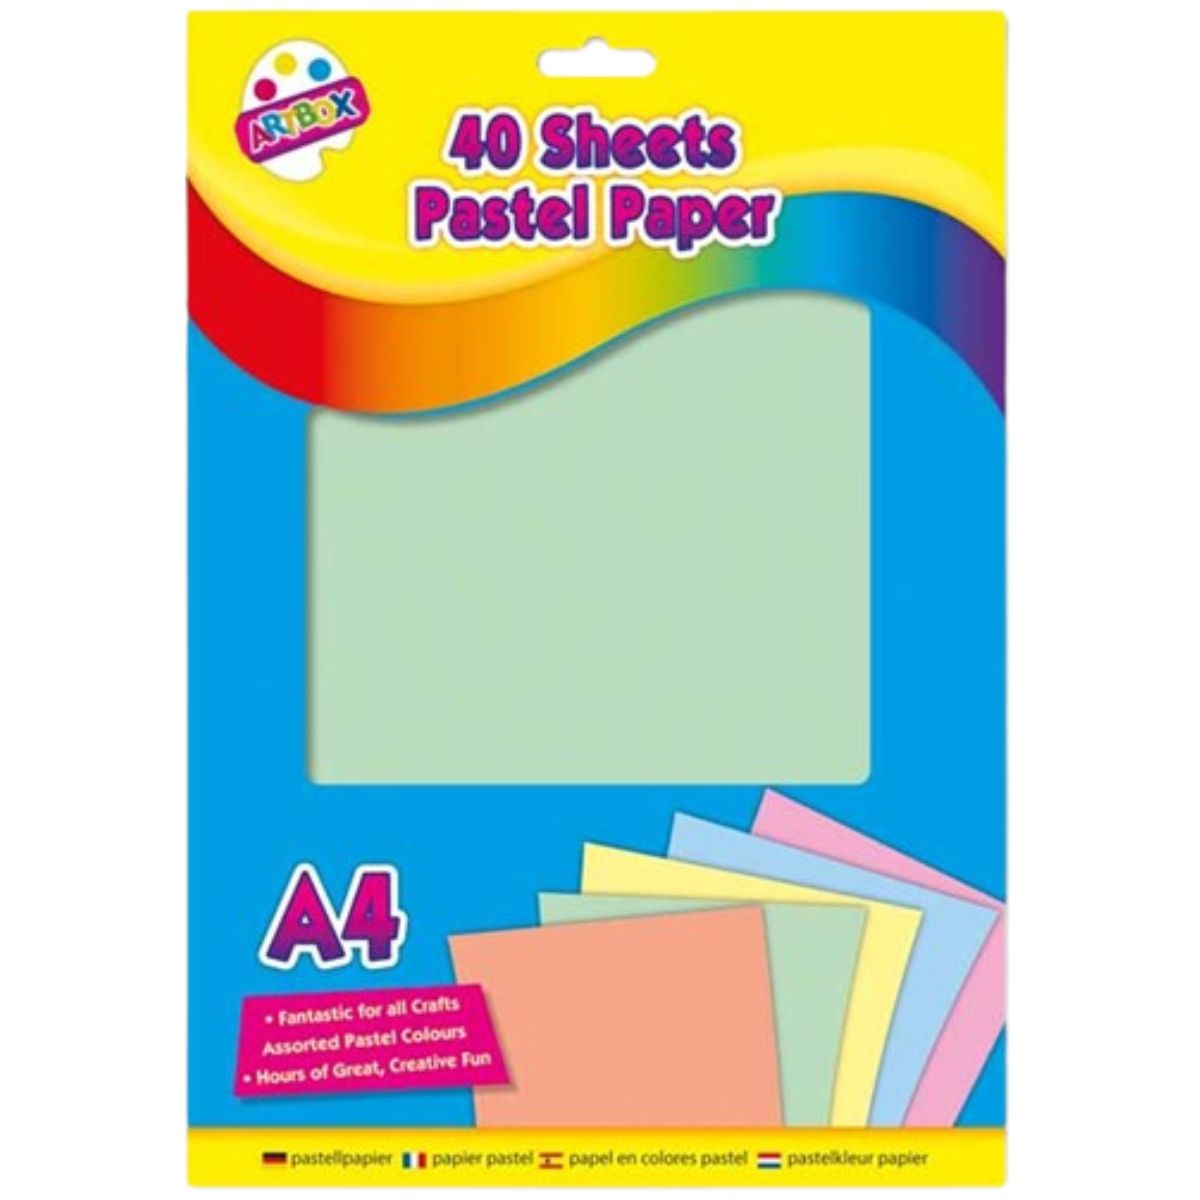 40 Sheets A4 Pastel Paper